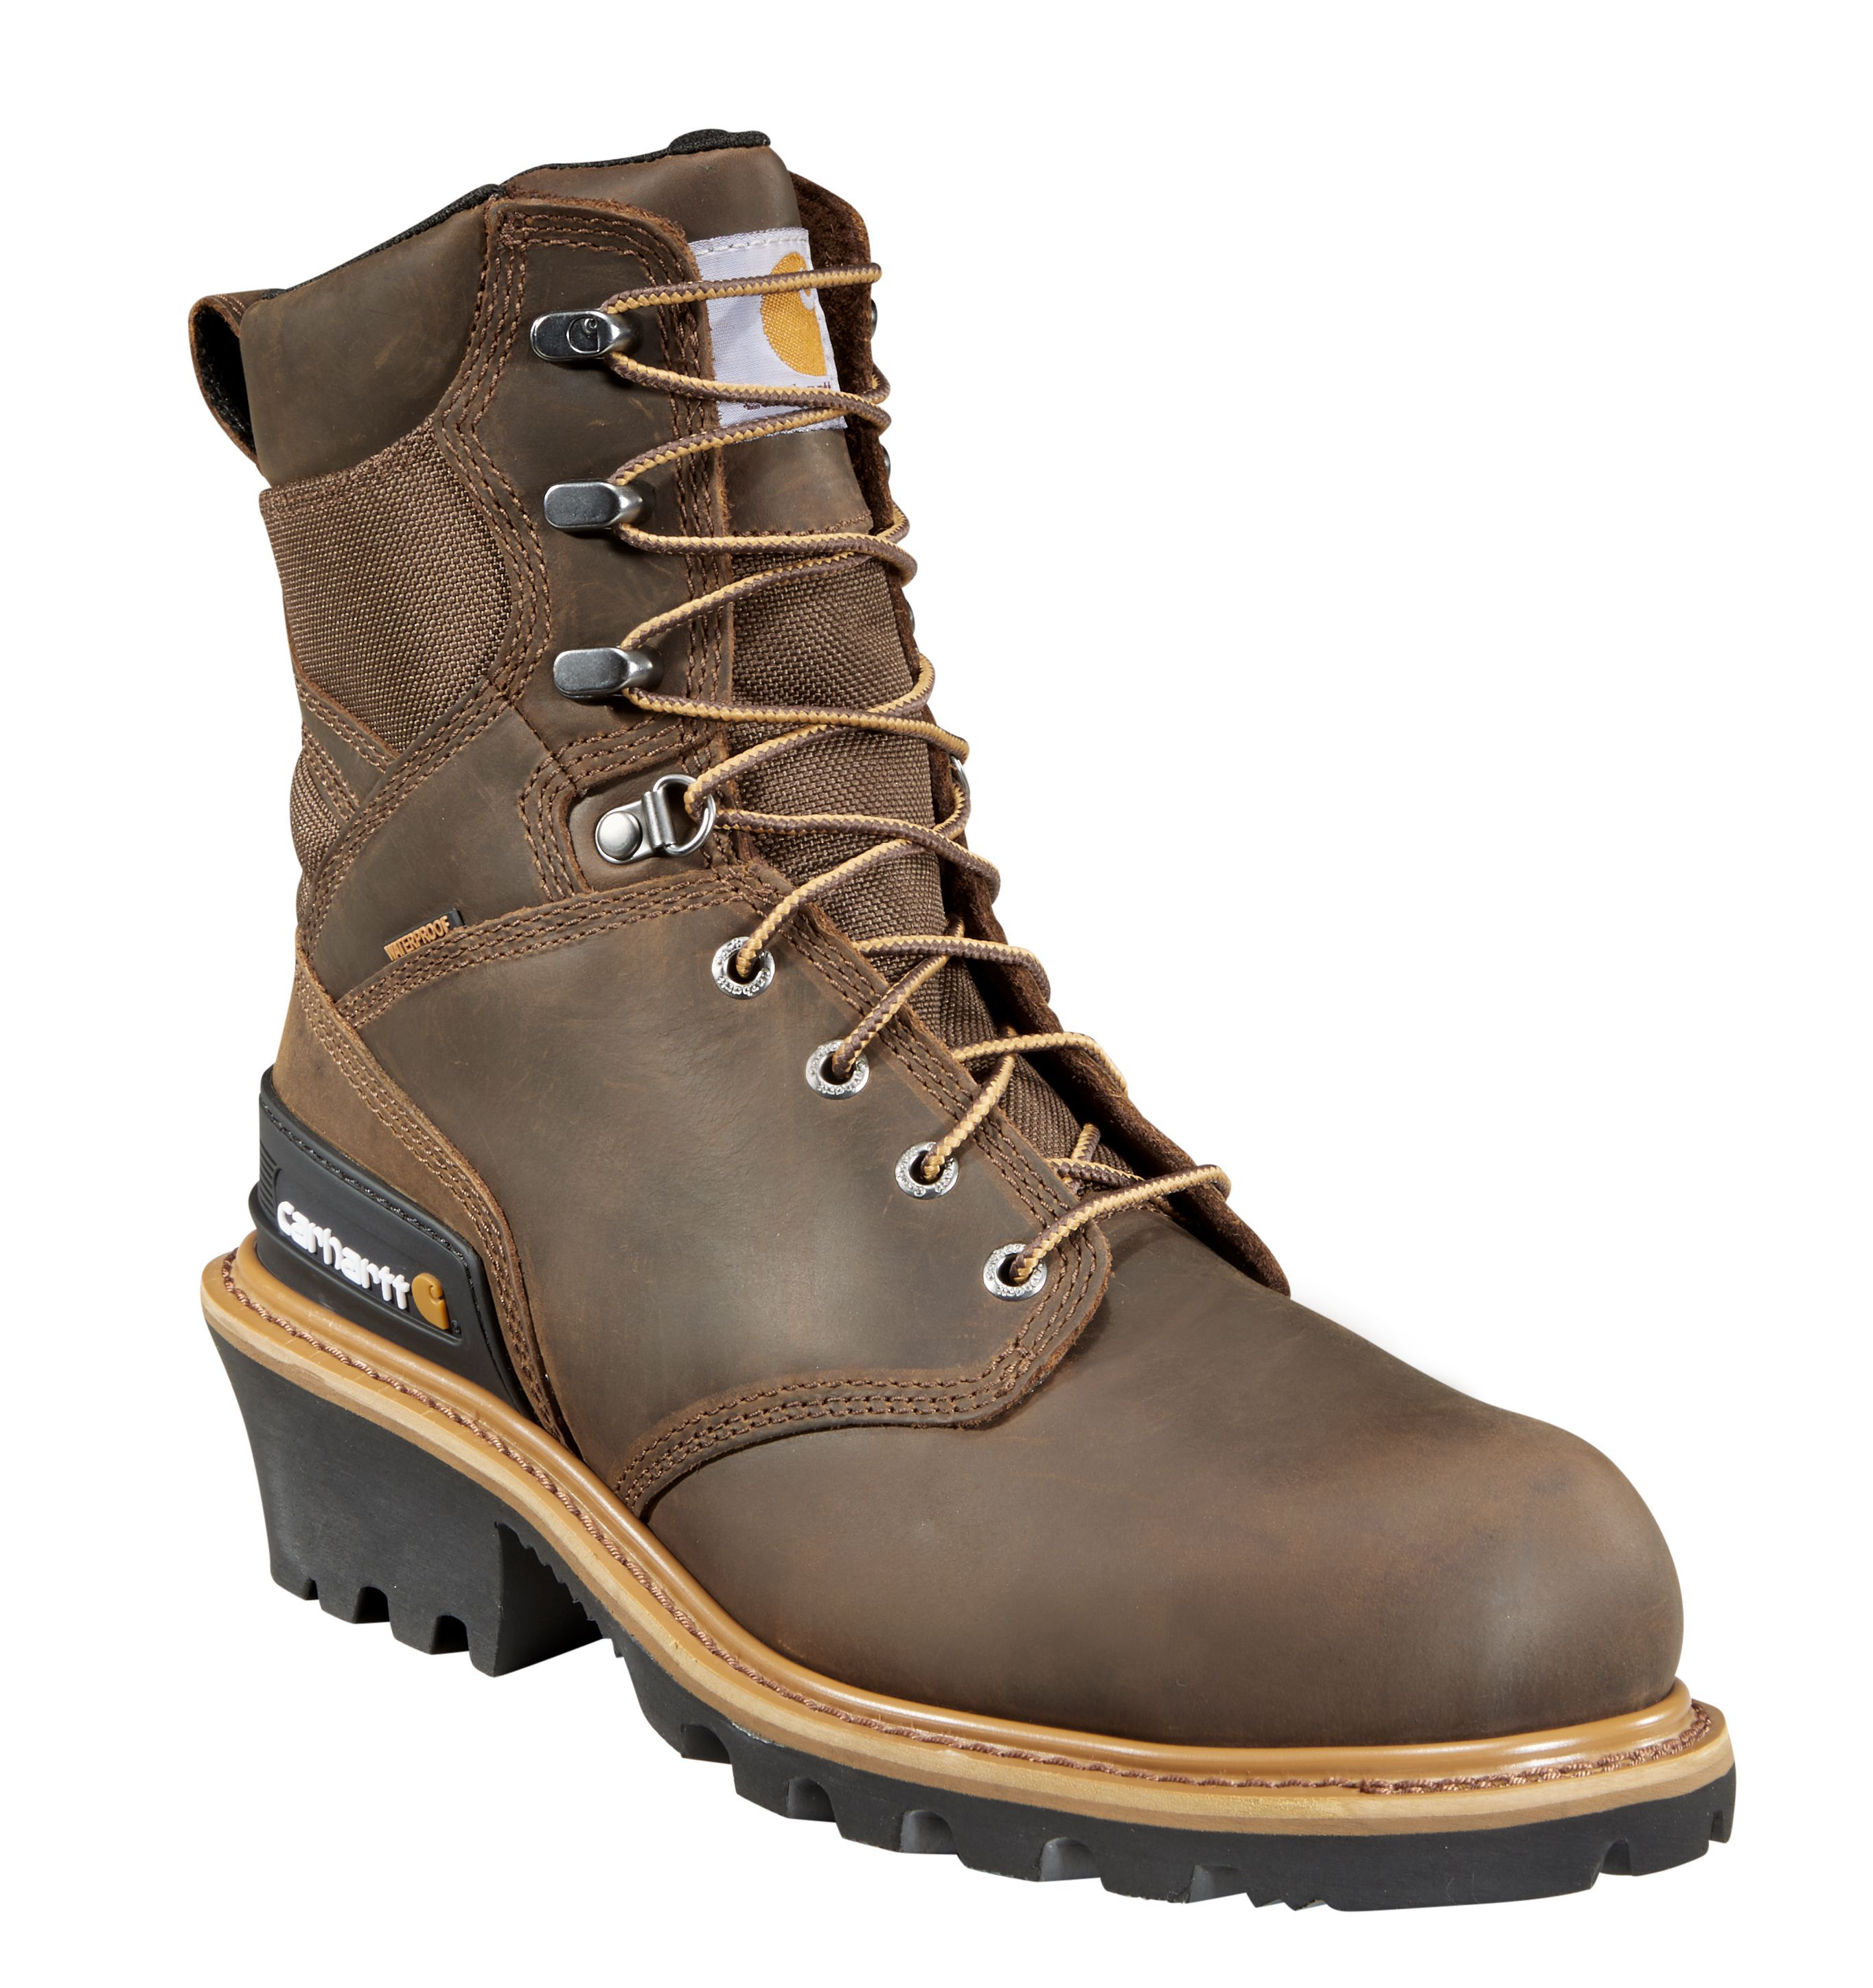 Carhartt Climbing 8"" Insulated Waterproof Composite Toe Work Boots for Men